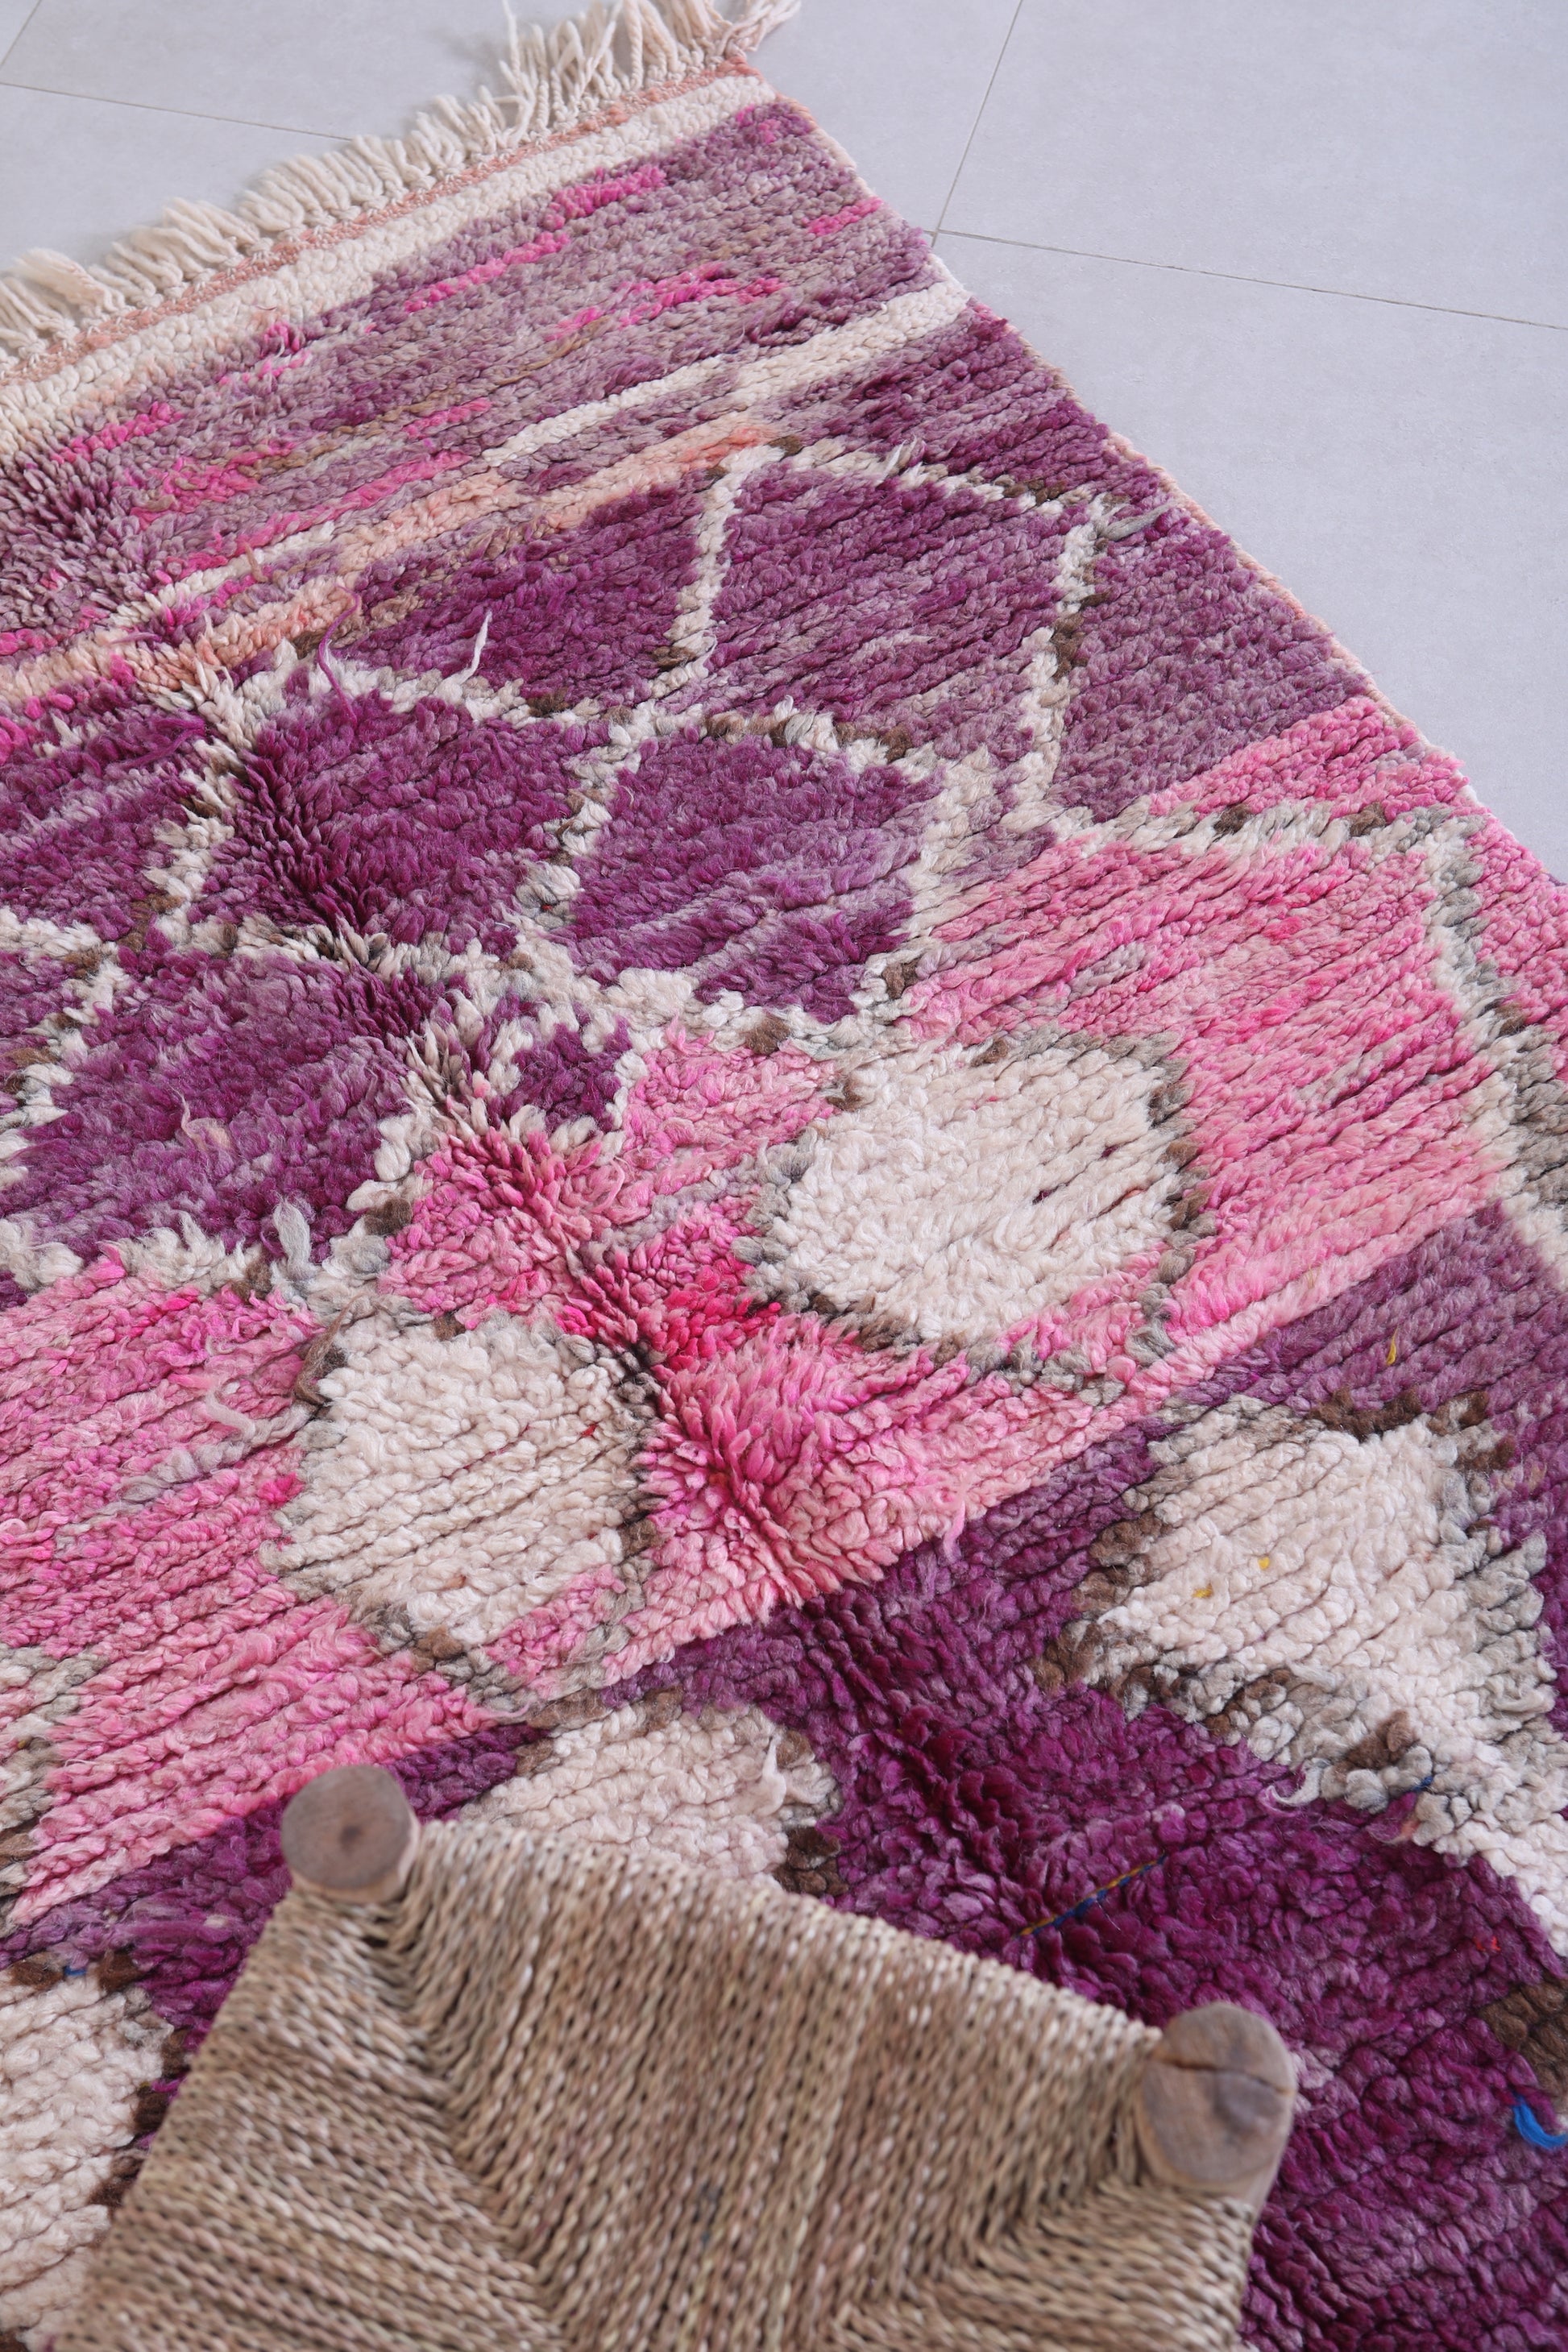 purple moroccan rug 3.5 X 5.3 Feet